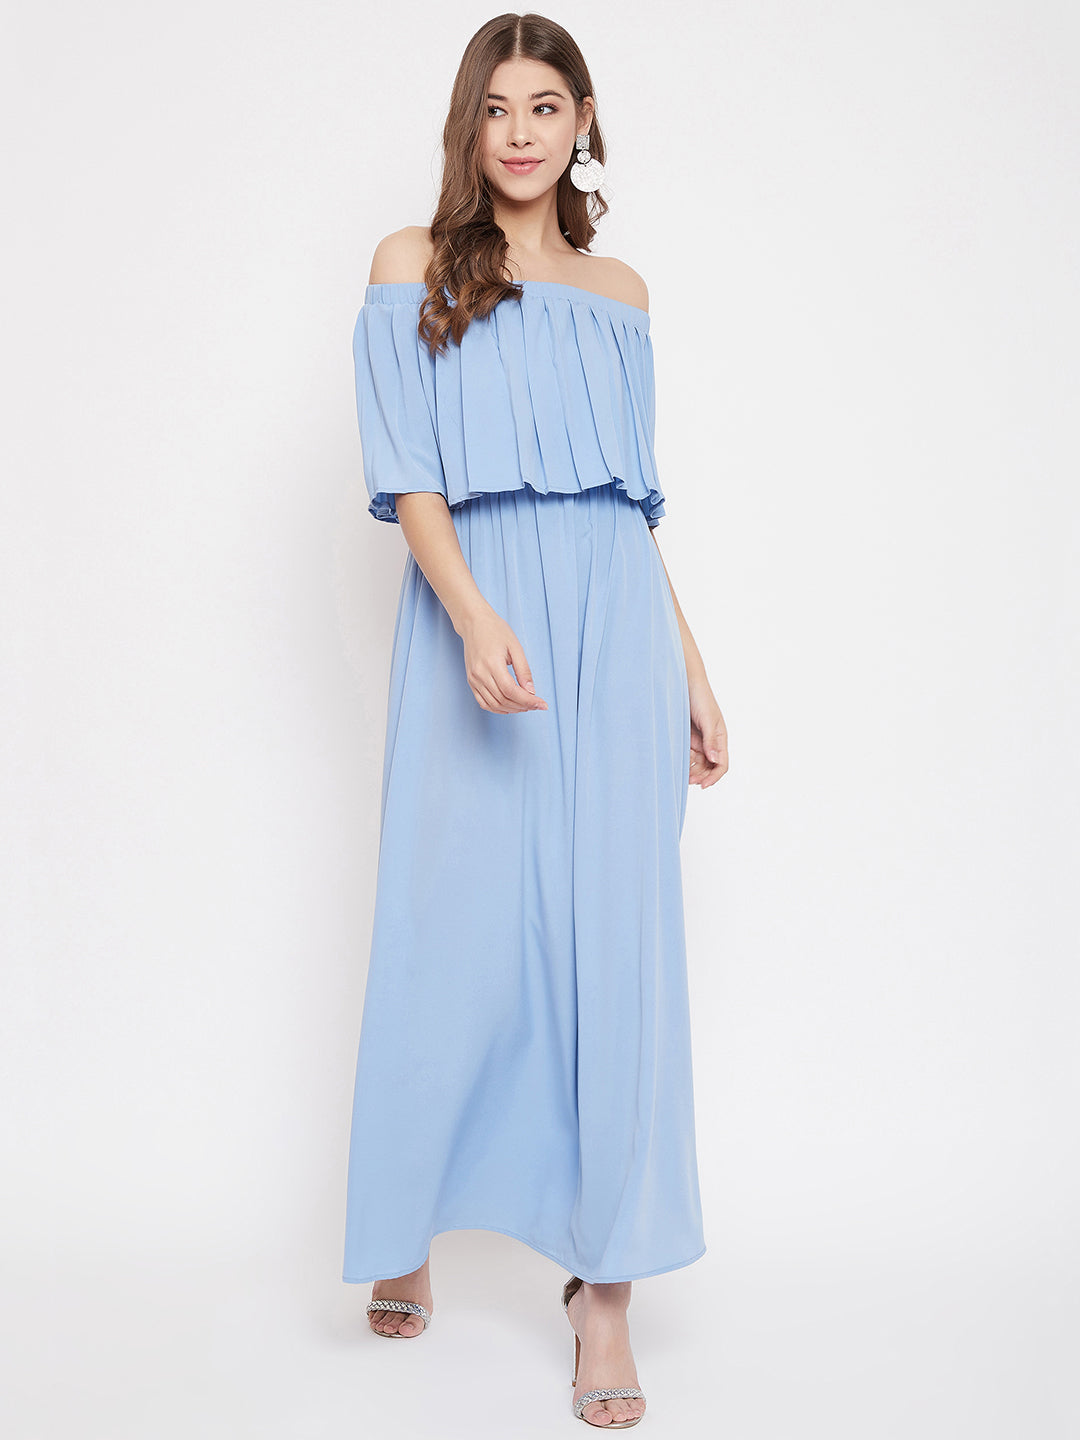 JWZUY Women's Solid Color Bra Off Shoulder Dress Waist Pleated Dress Dress  Large Swing Ball Dress Blue S